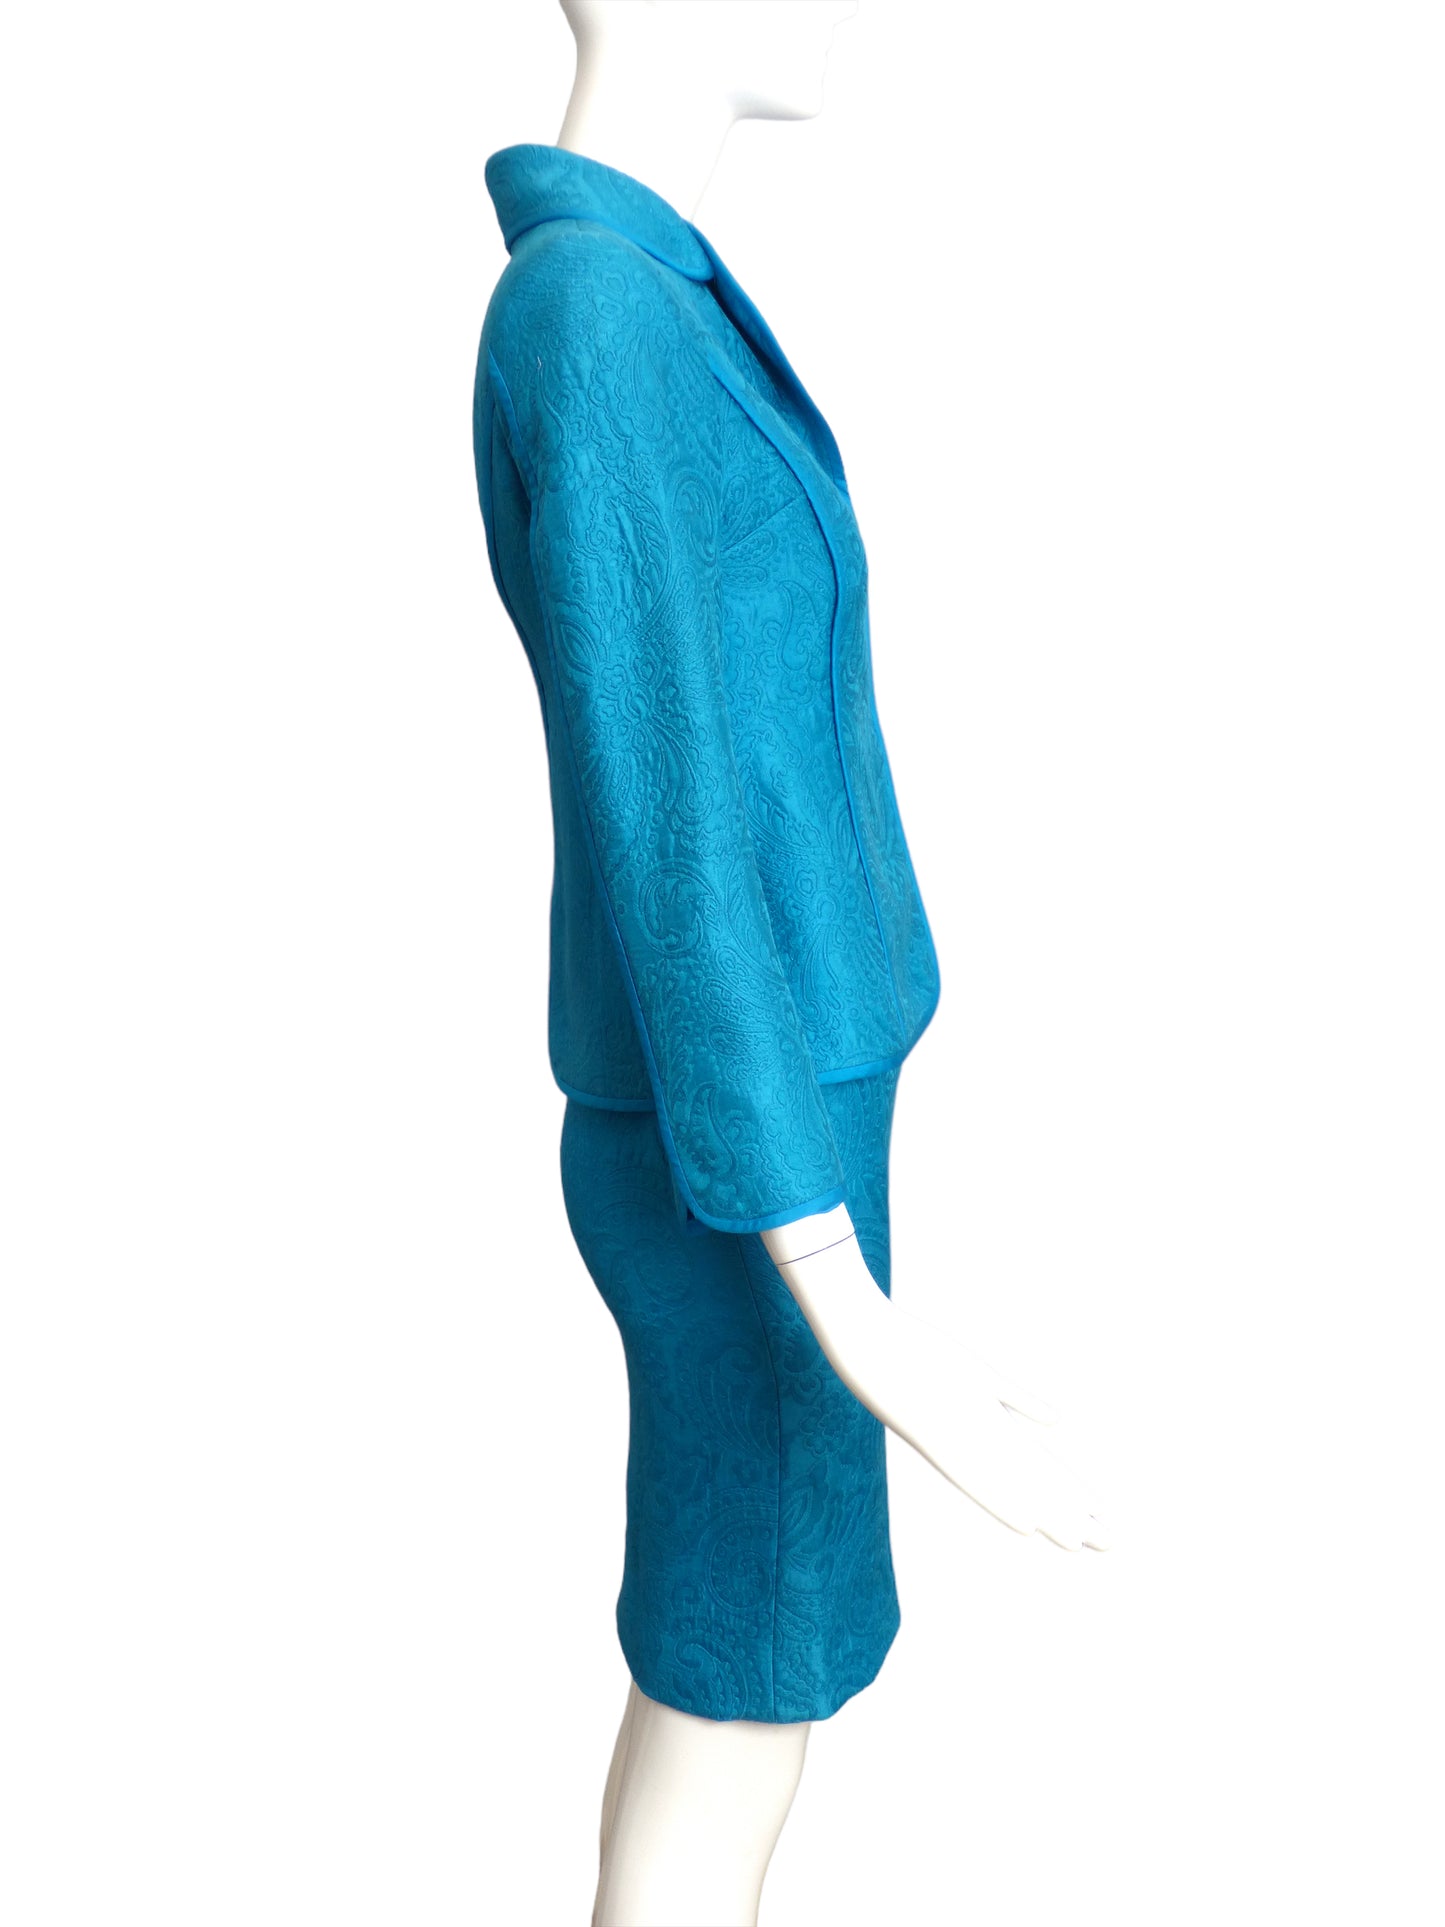 BOB MACKIE-2004 Turquoise Silk Brocade Suit, Size-4P